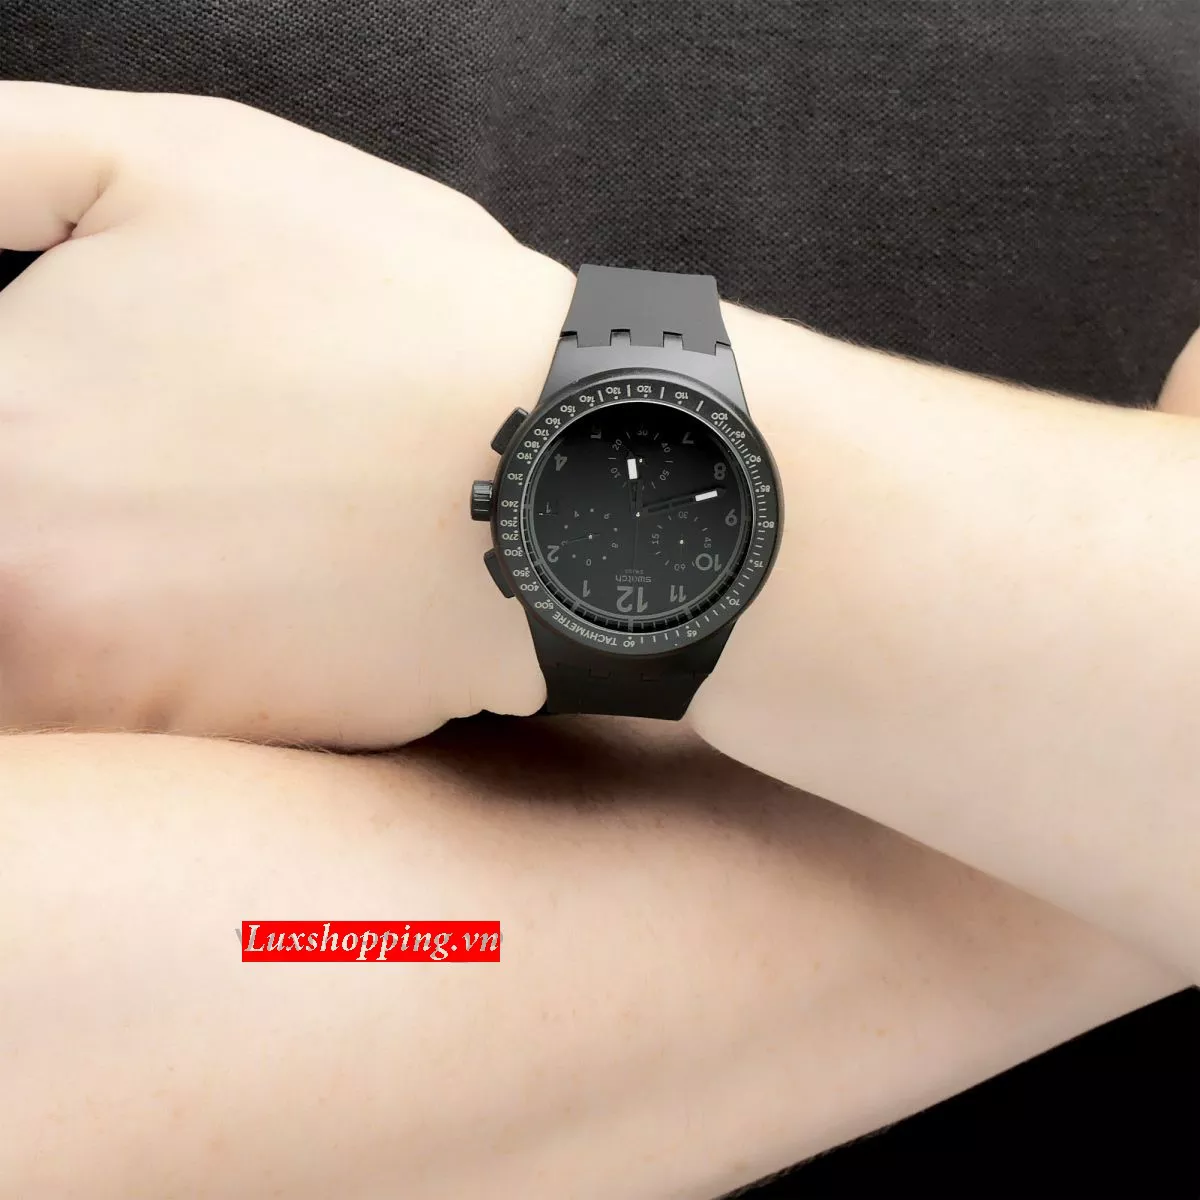 Swatch Watch, Unisex Swiss Chronograph Black Silicone, 42mm 